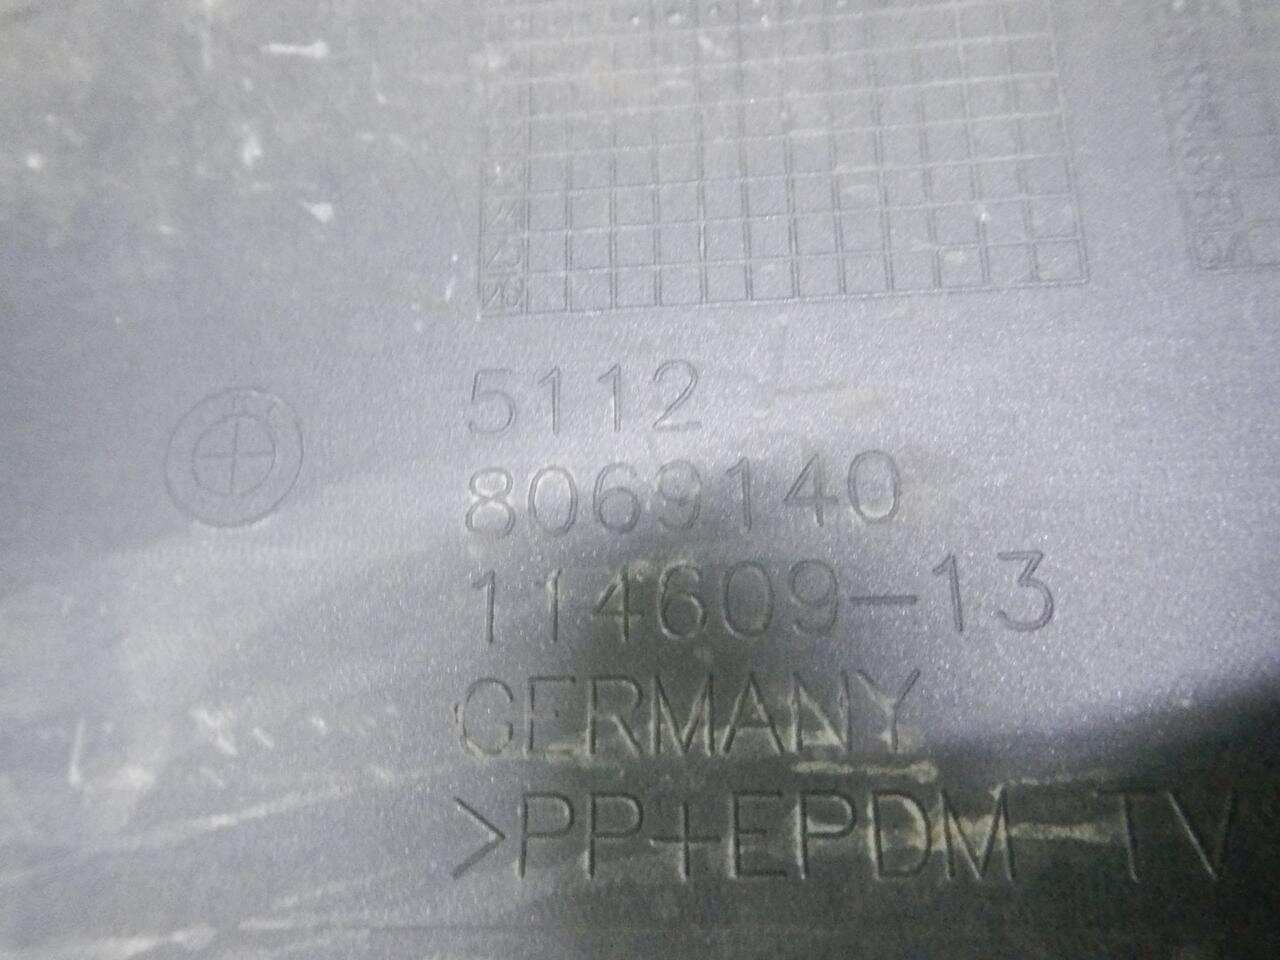 Юбка заднего бампера BMW X2 F39 (2017-Н.В.) 51128090074 0000004874683